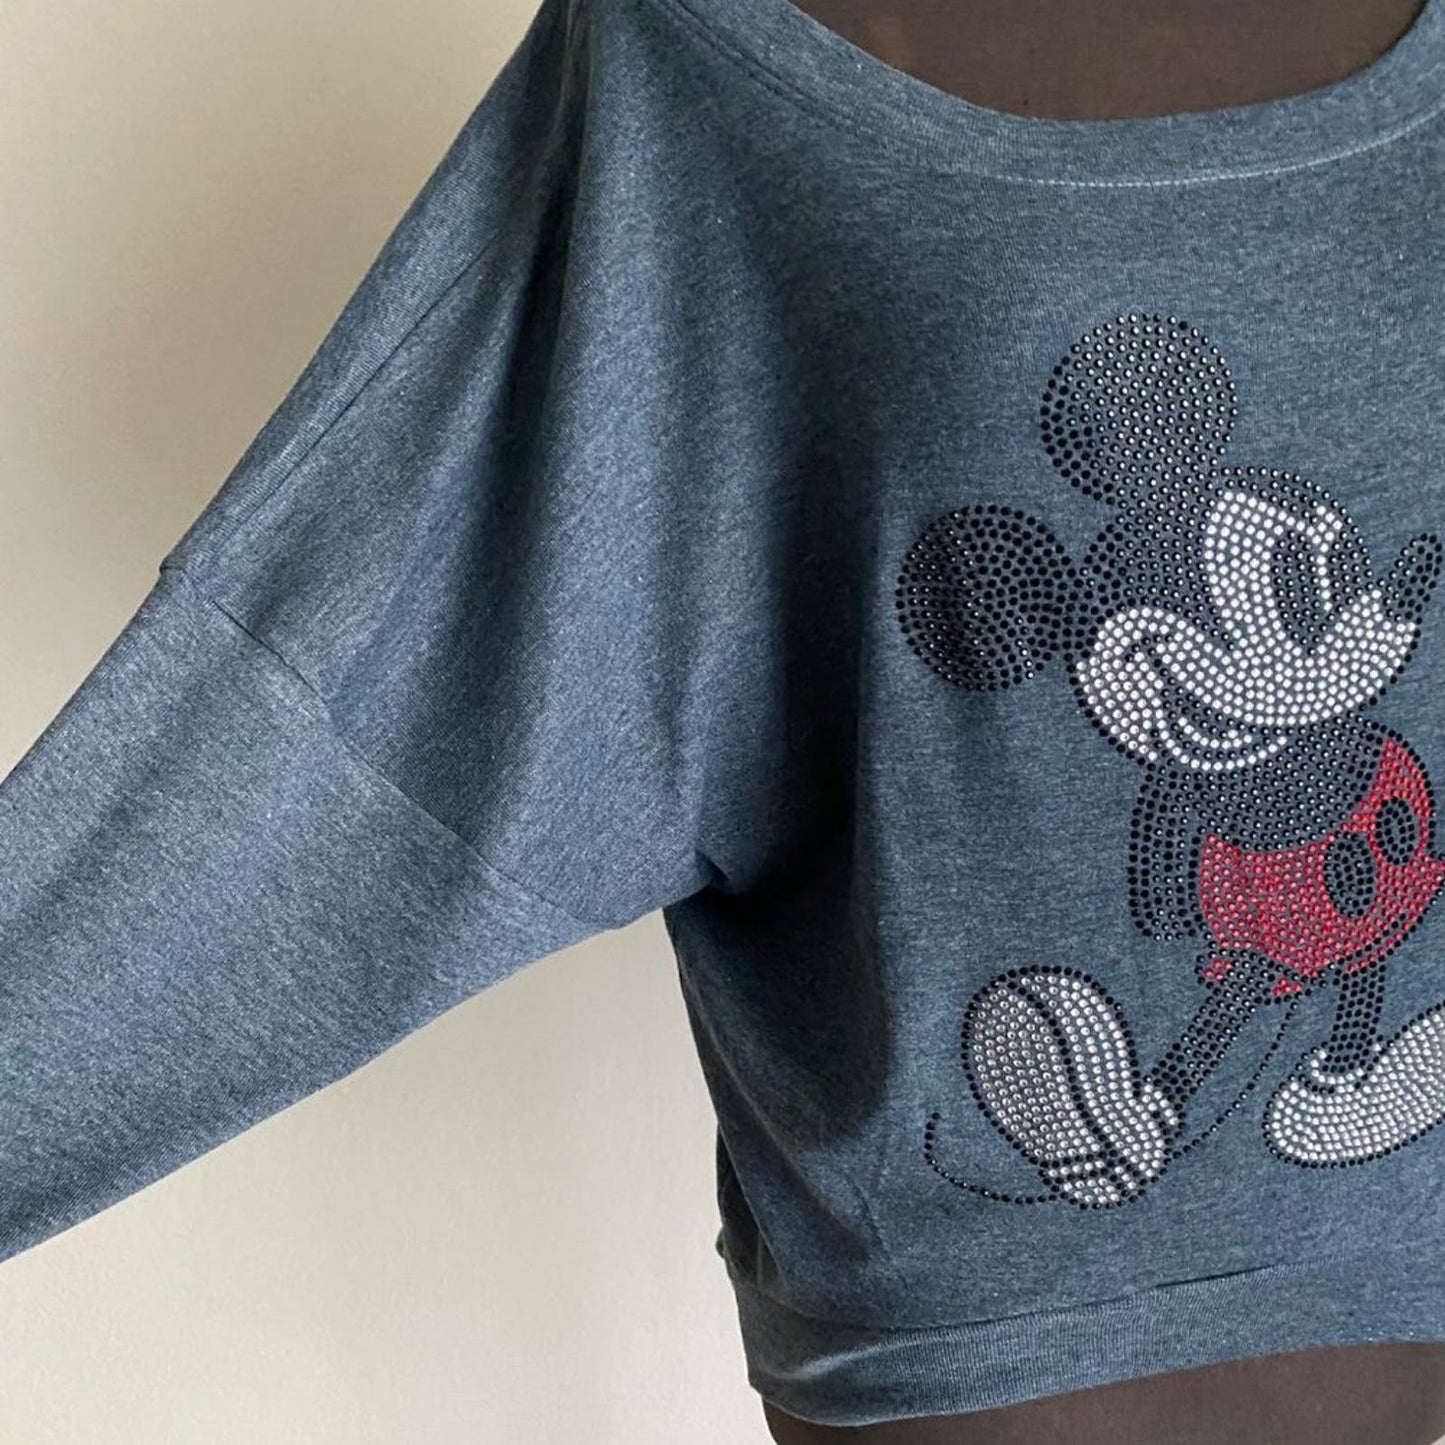 Disney Parks sz XS mickey mouse shirt NWT